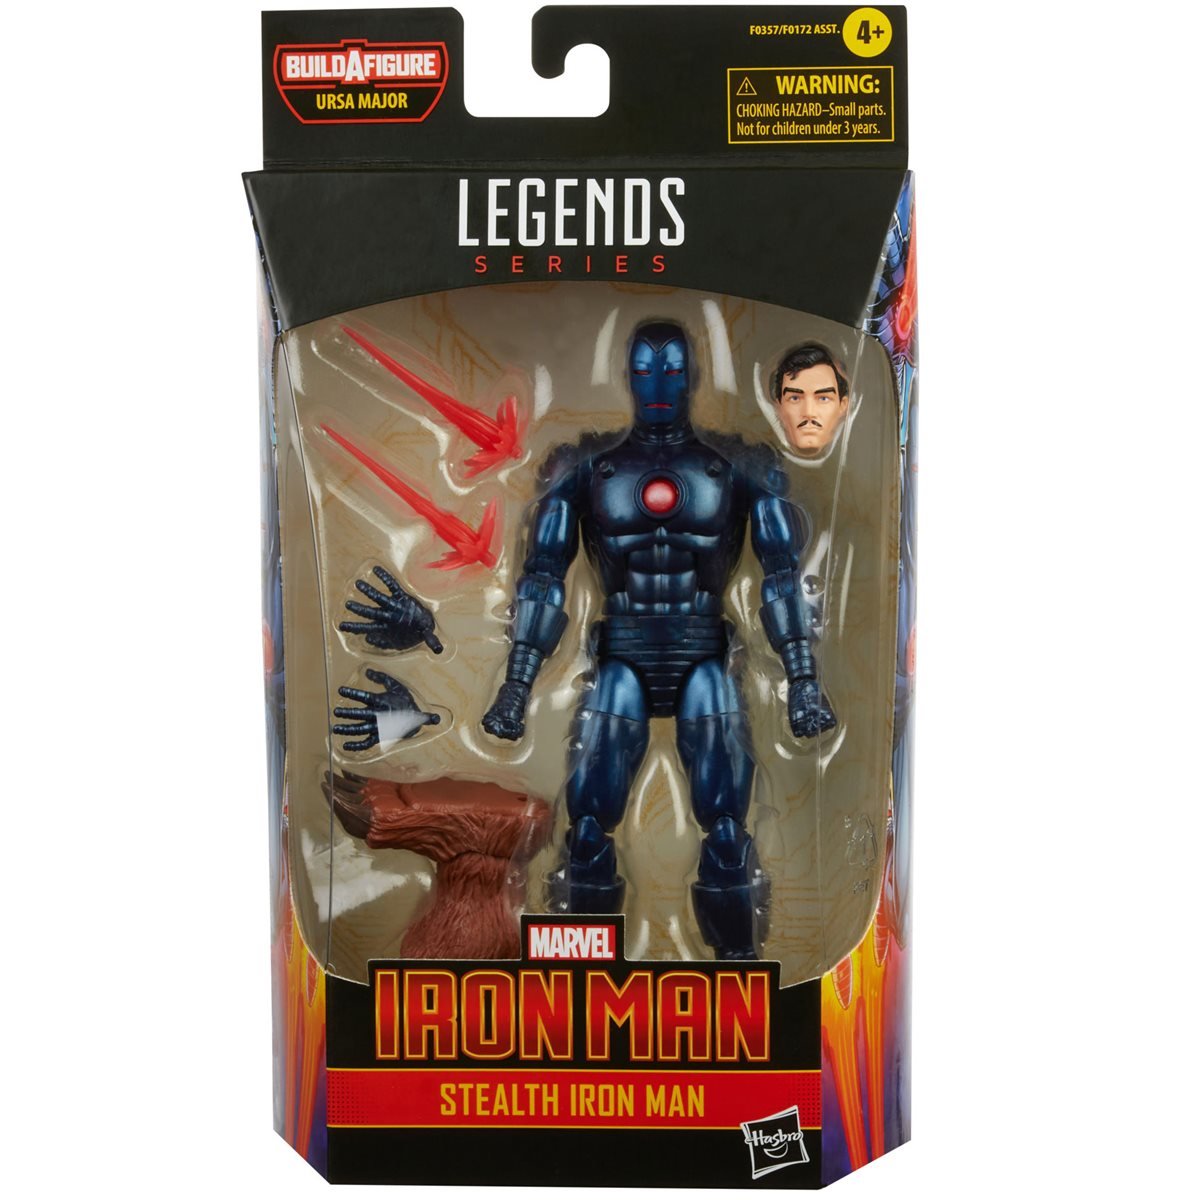 Marvel Legends Ursa Major build a figure wave Comic Stealth Iron Man  6-inch figure packaging front